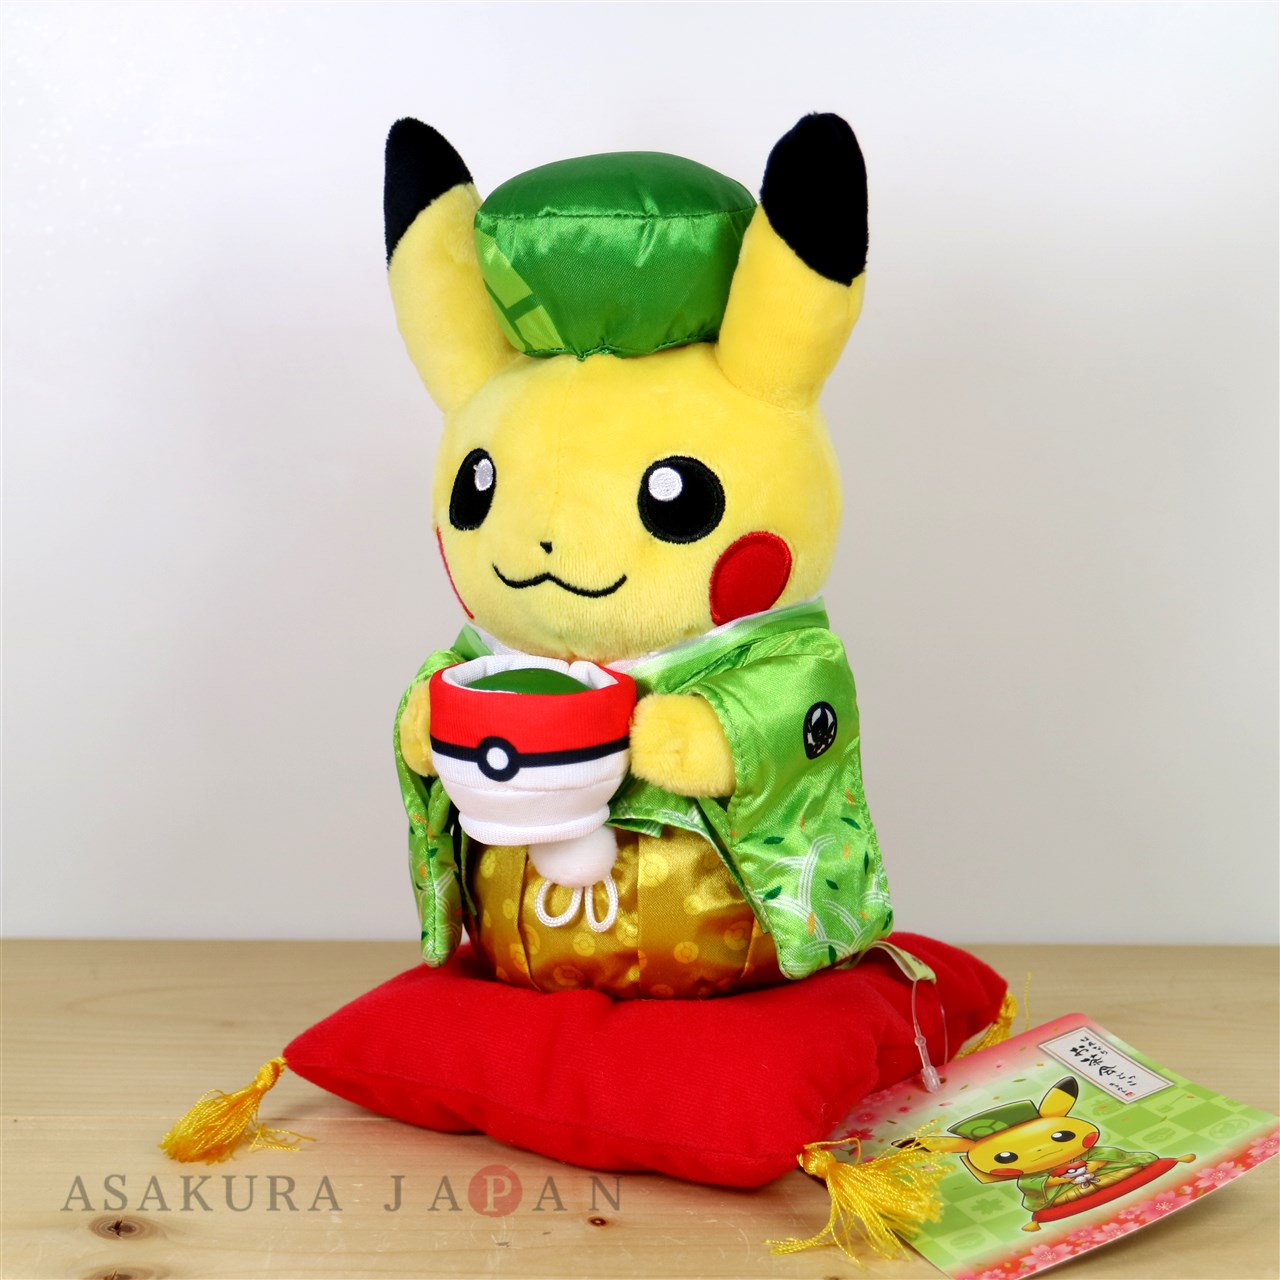 Pocket Monsters - Pikachu - Kyoto Tea Party - Female Ver. (Pokémon Cen -  Solaris Japan